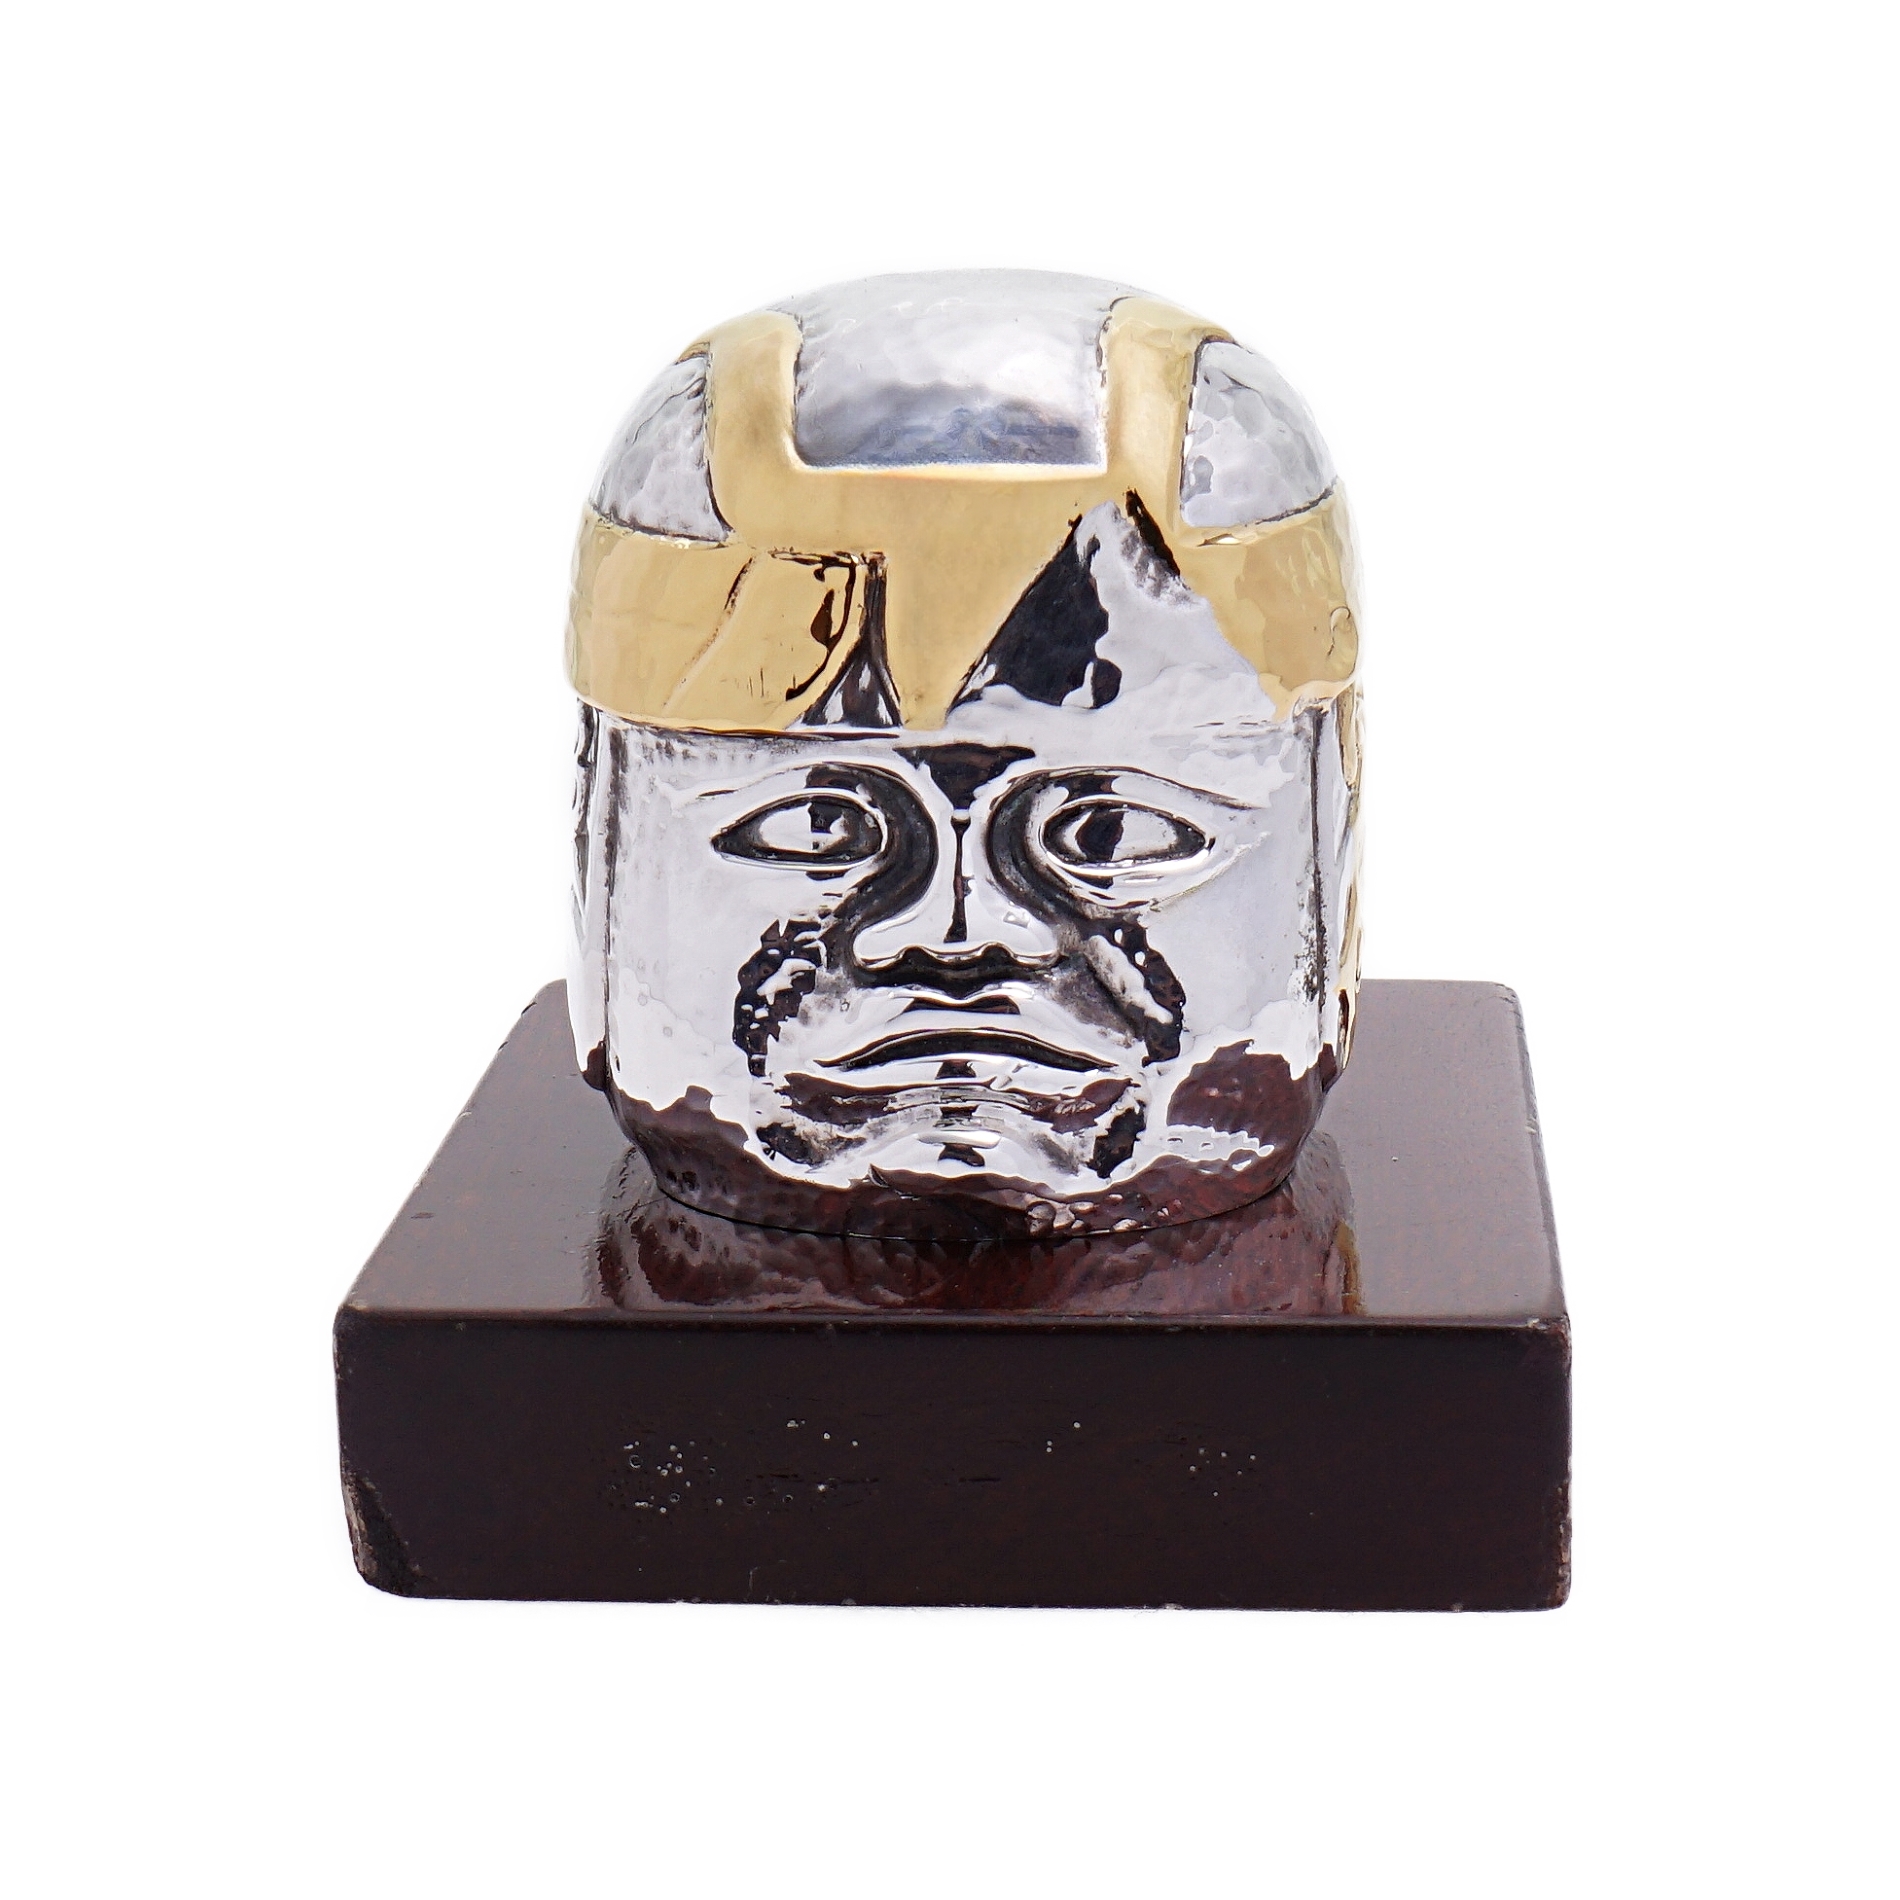 Silberfigur Inkakopf auf Holzsockel - Tane Mexiko